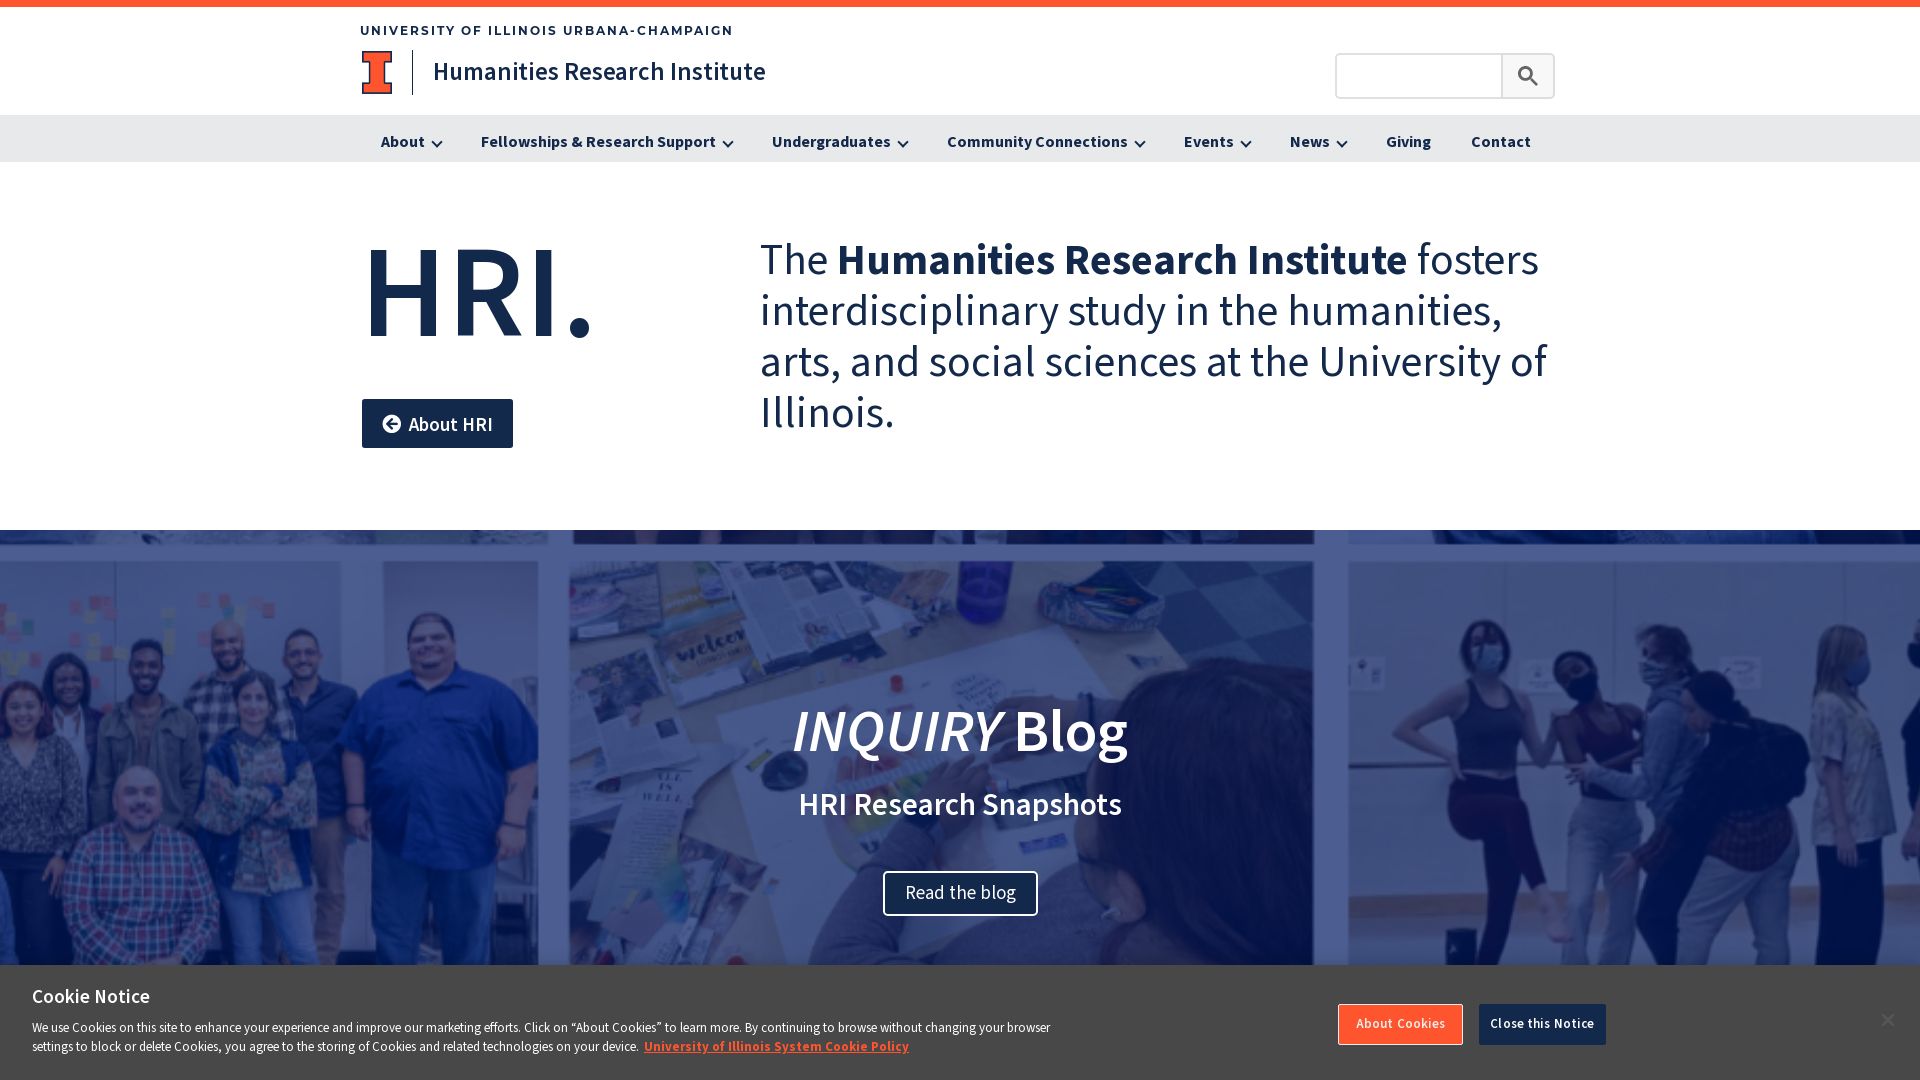 Status do site hri.illinois.edu está   ONLINE